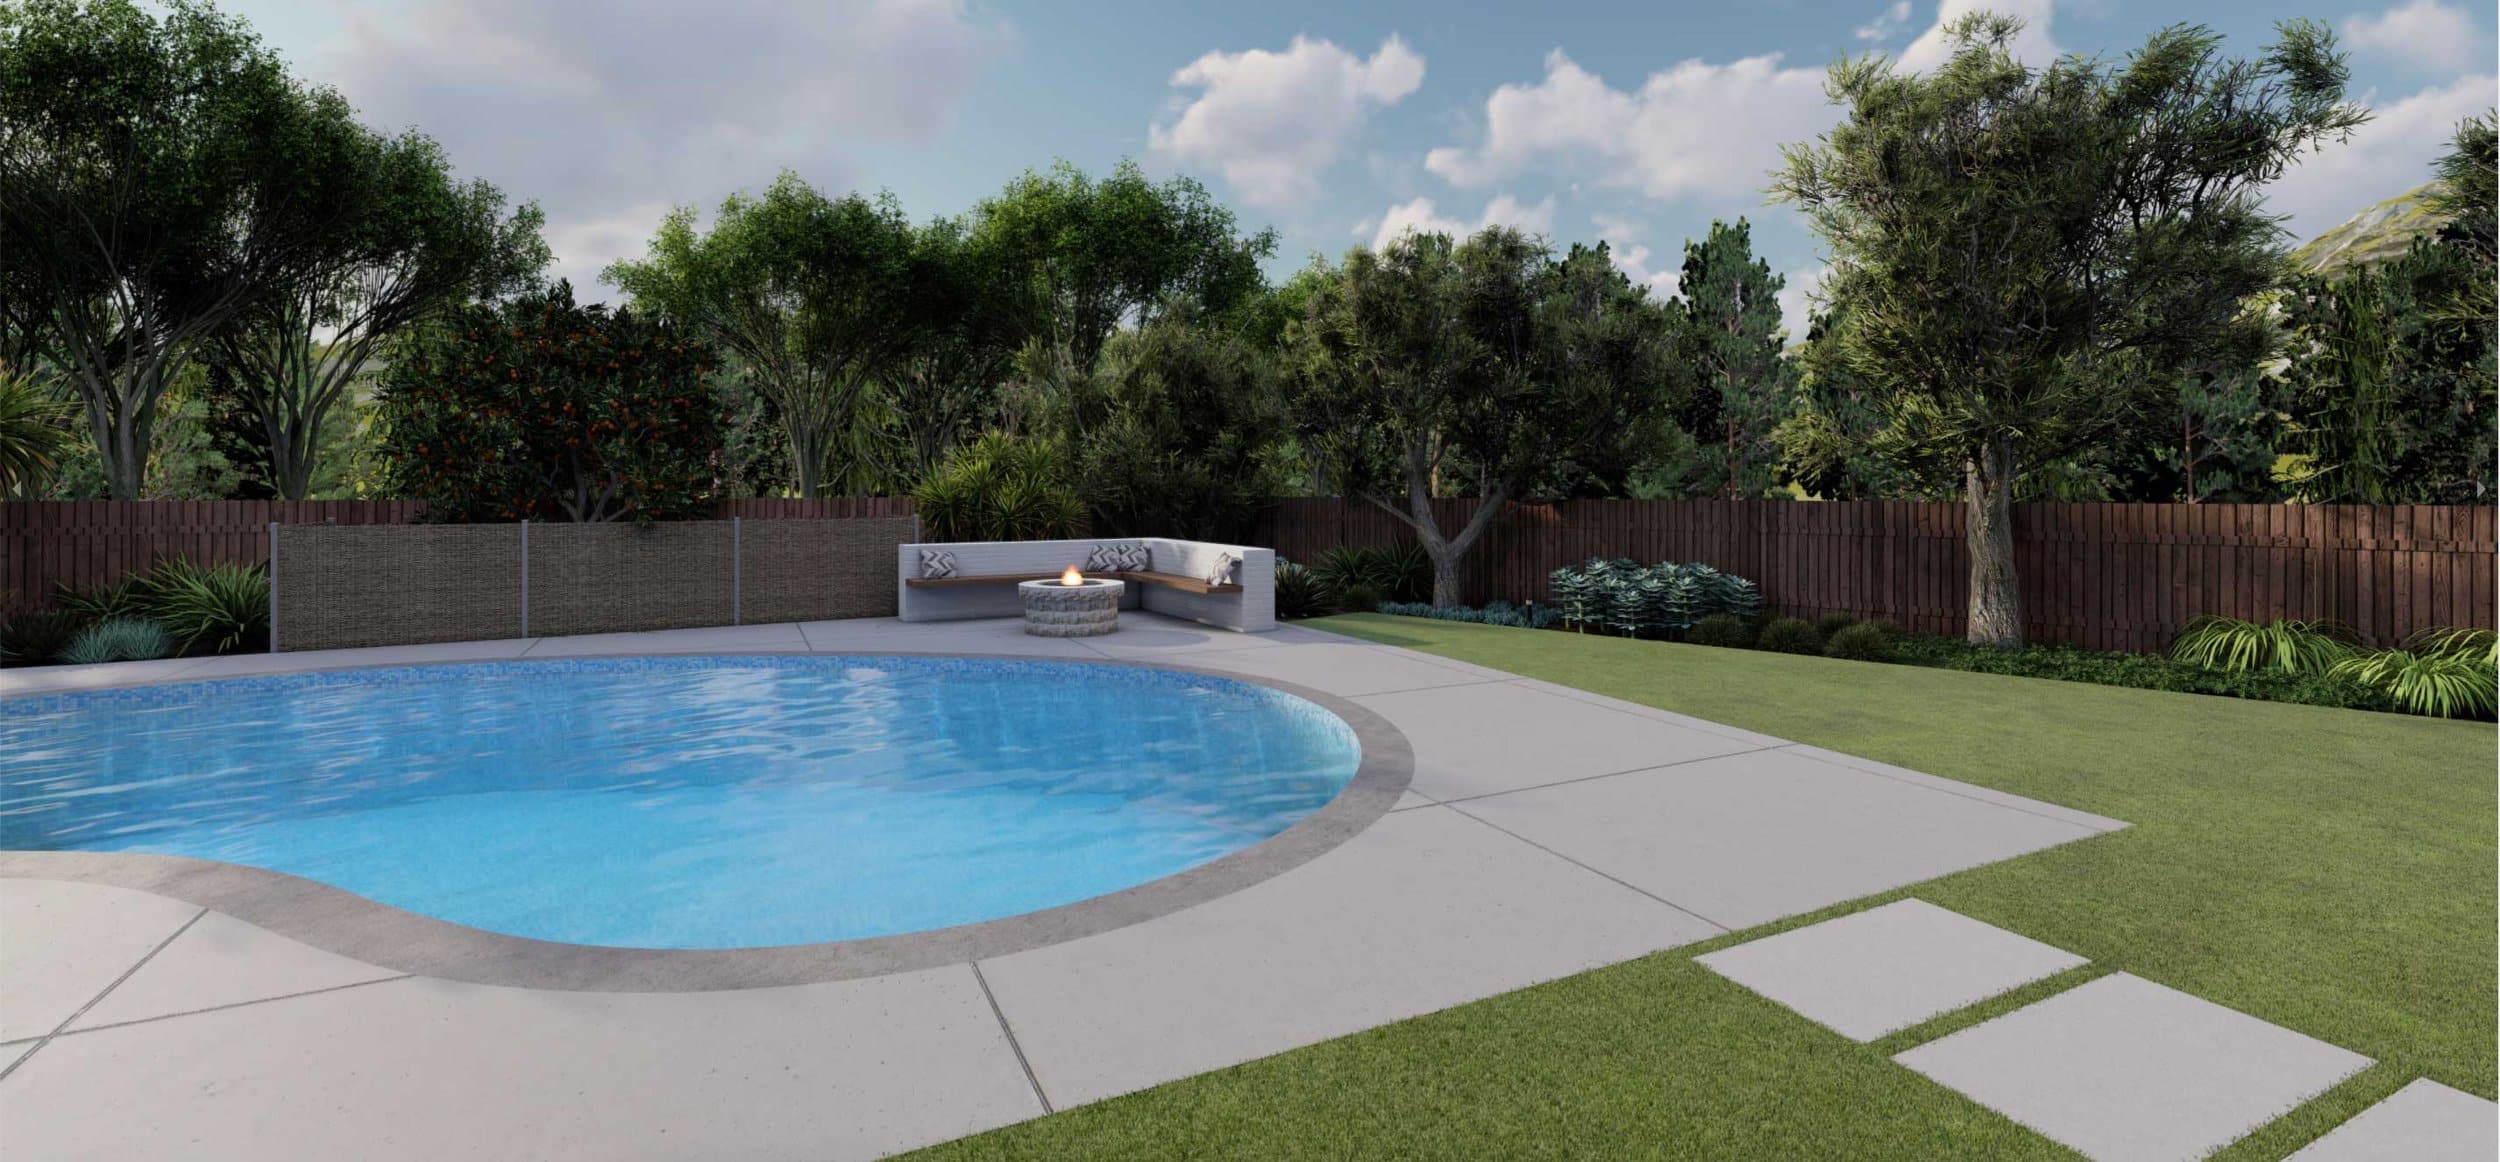 Sacramento elegant backyard pool area with fire pit seating area